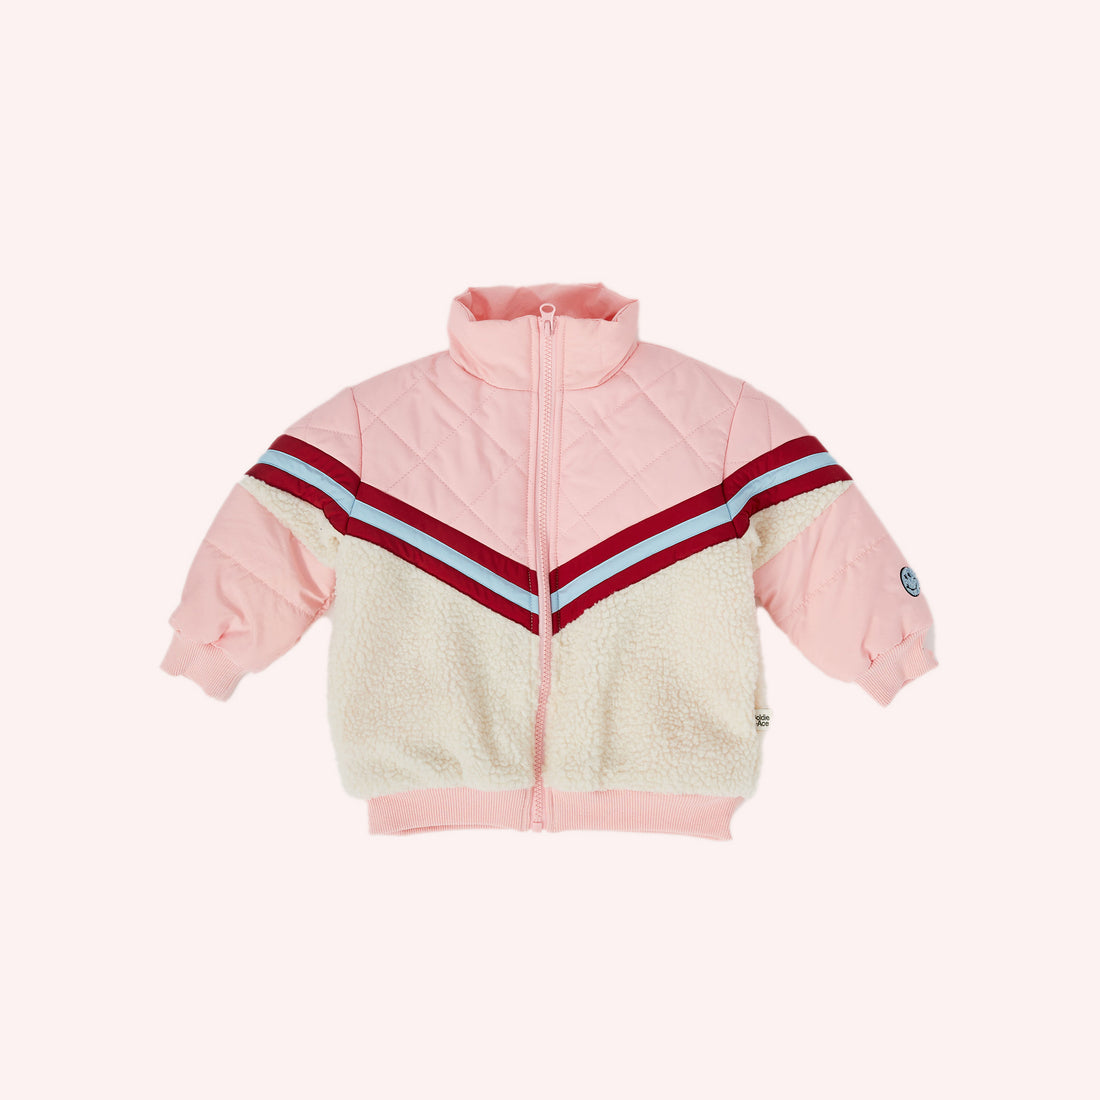 Kobe Shearling Jacket - Tulip Pink